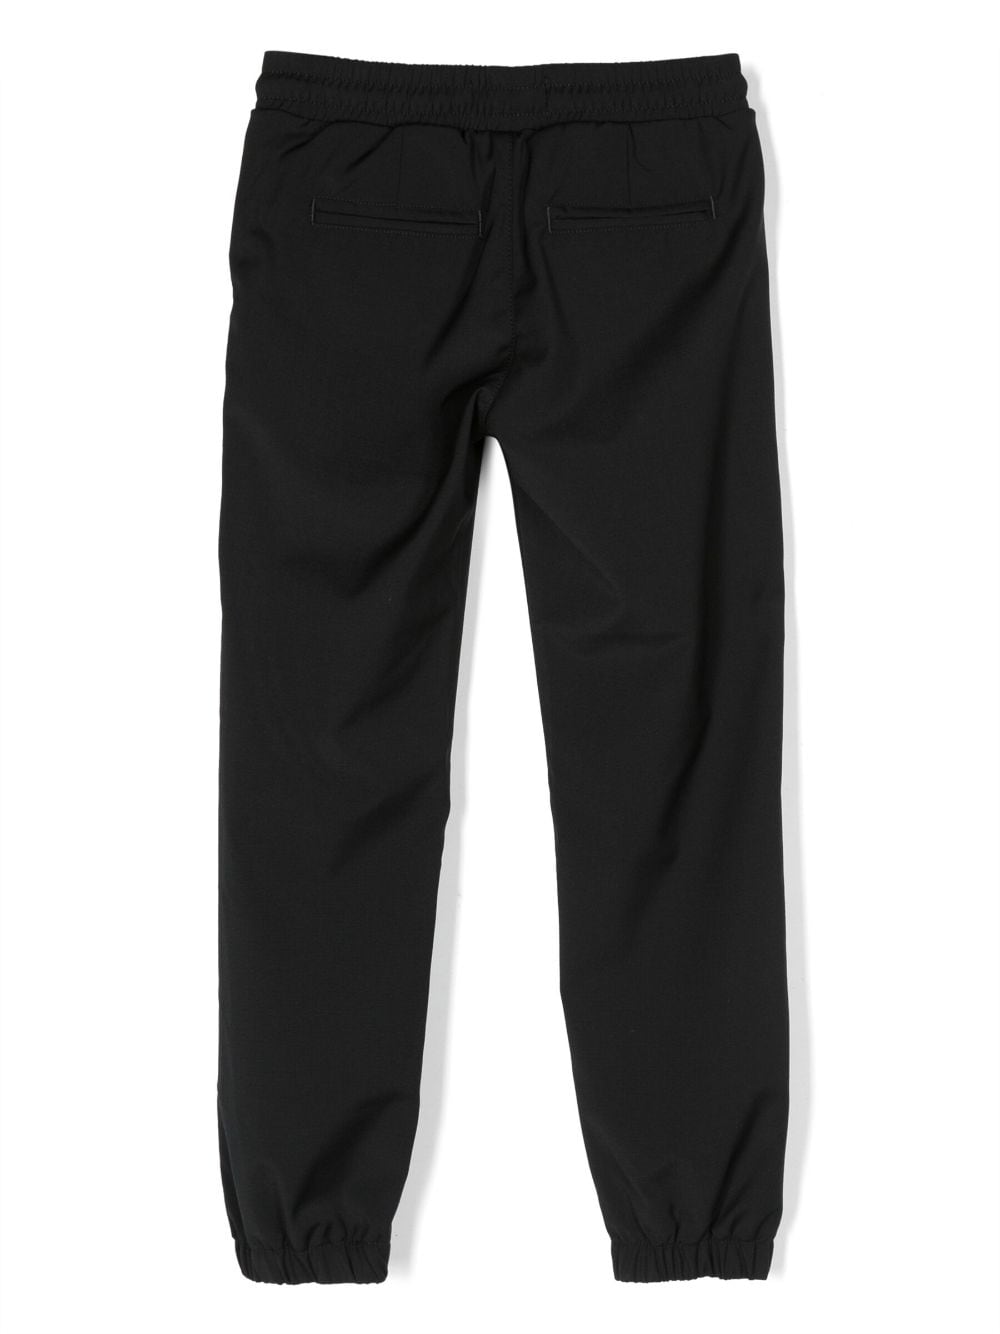 Black wool blend boy KARL LAGERFELD pants | Carofiglio Junior